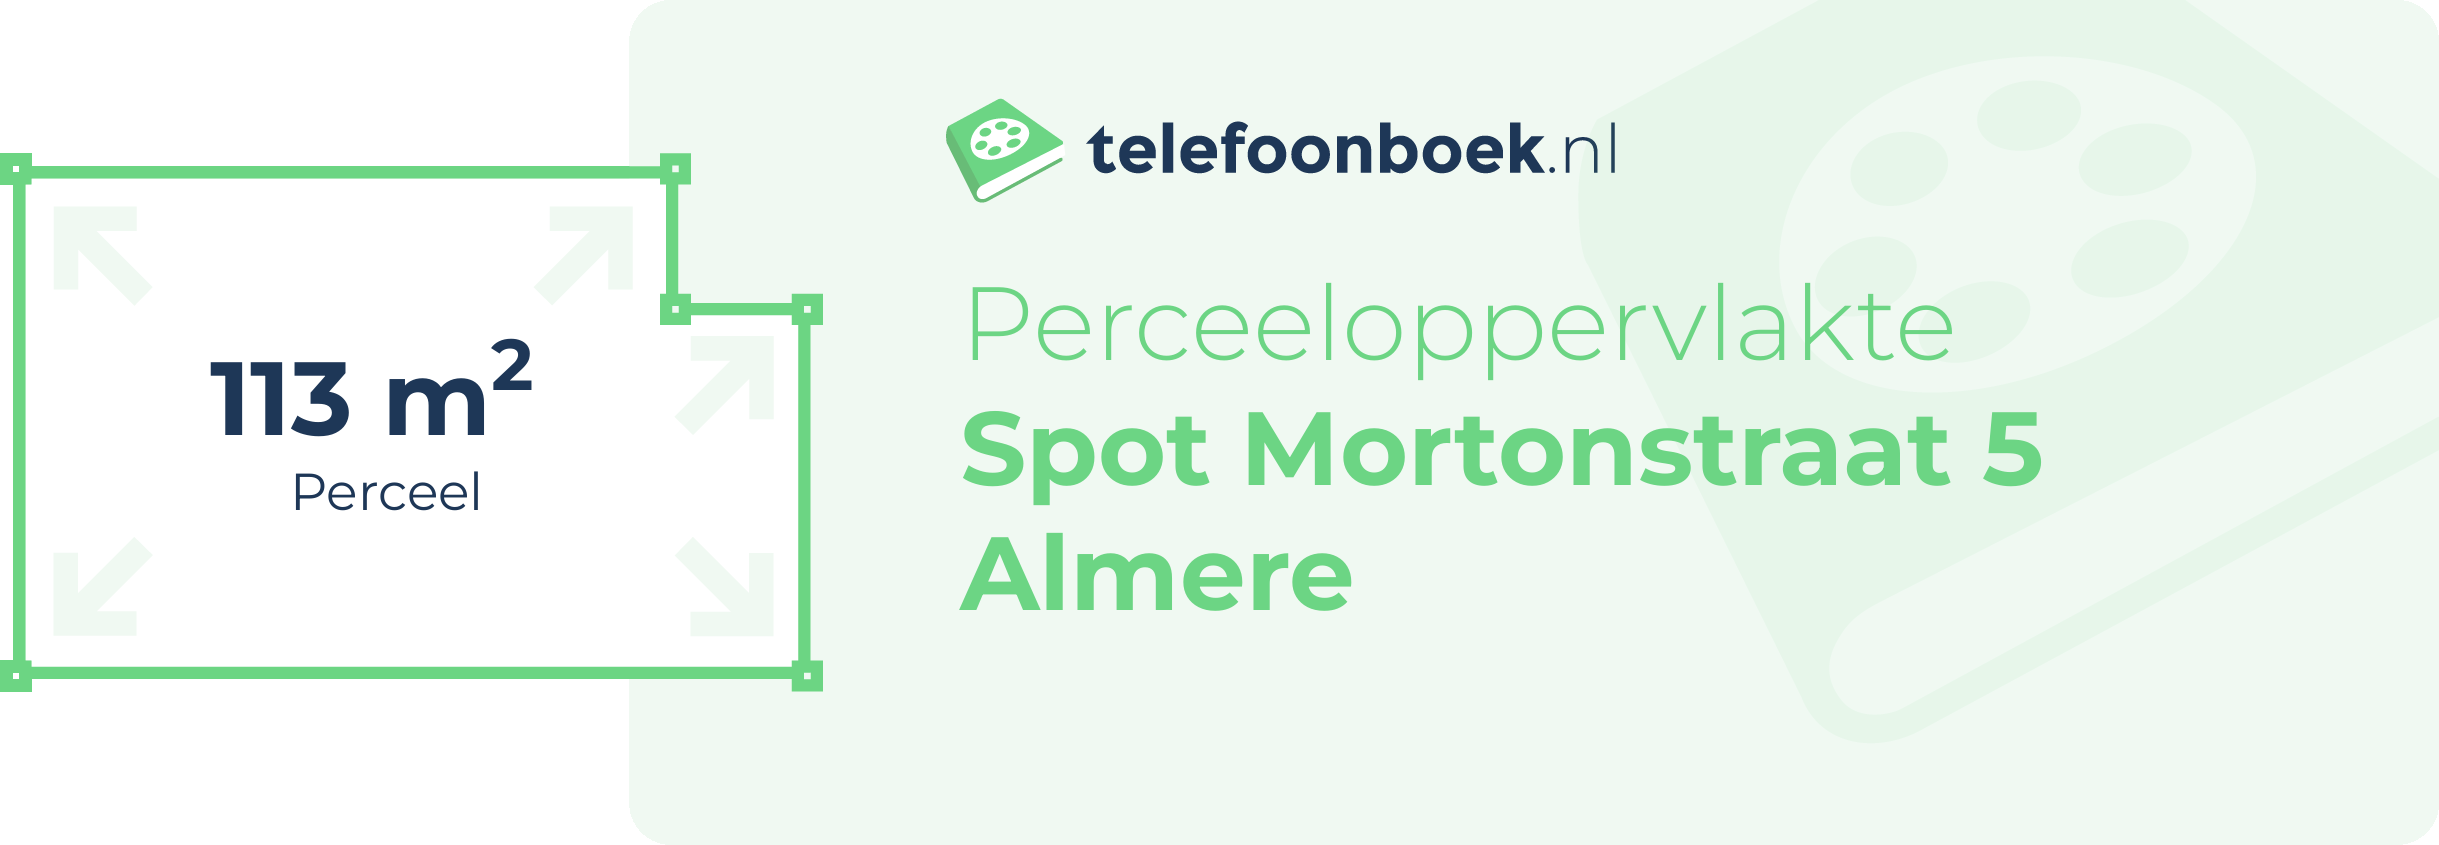 Perceeloppervlakte Spot Mortonstraat 5 Almere